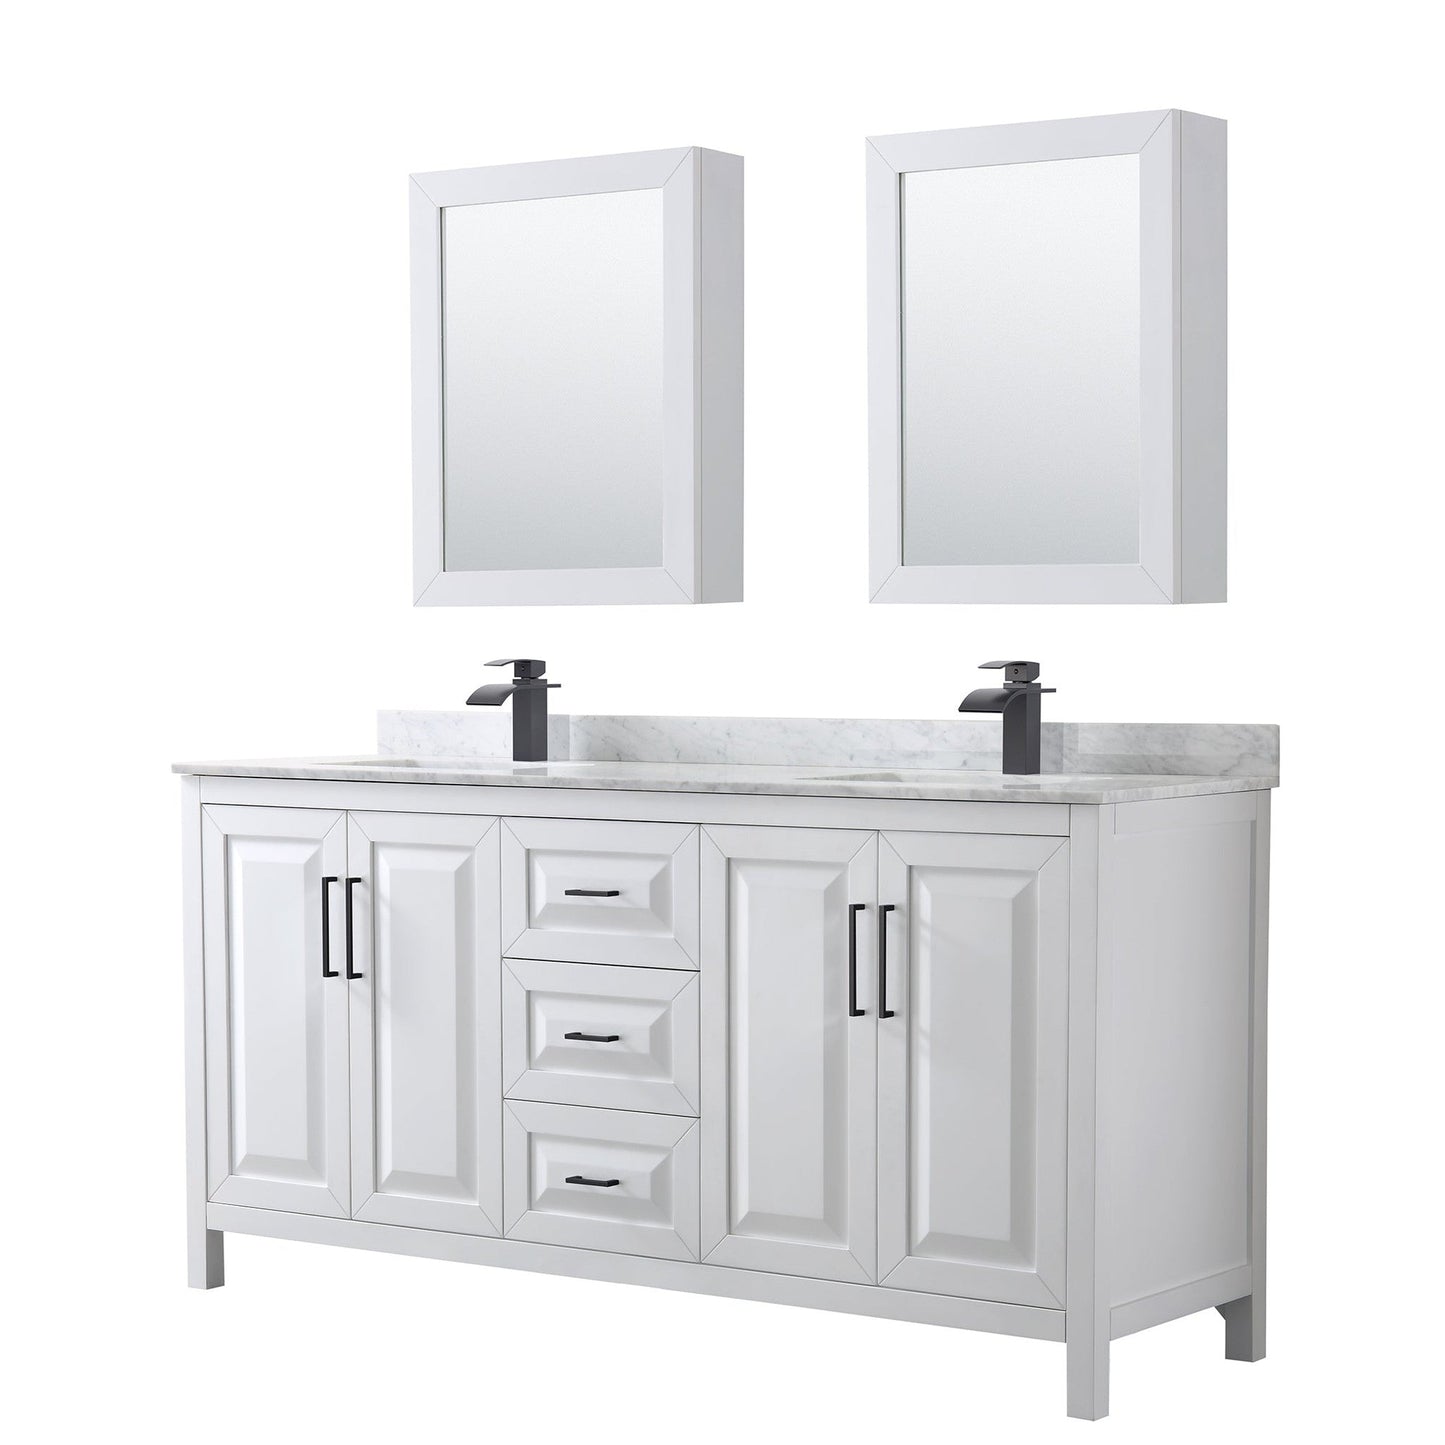 Daria 72" Double Bathroom Vanity in White, White Carrara Marble Countertop, Undermount Square Sinks, Matte Black Trim, Medicine Cabinets